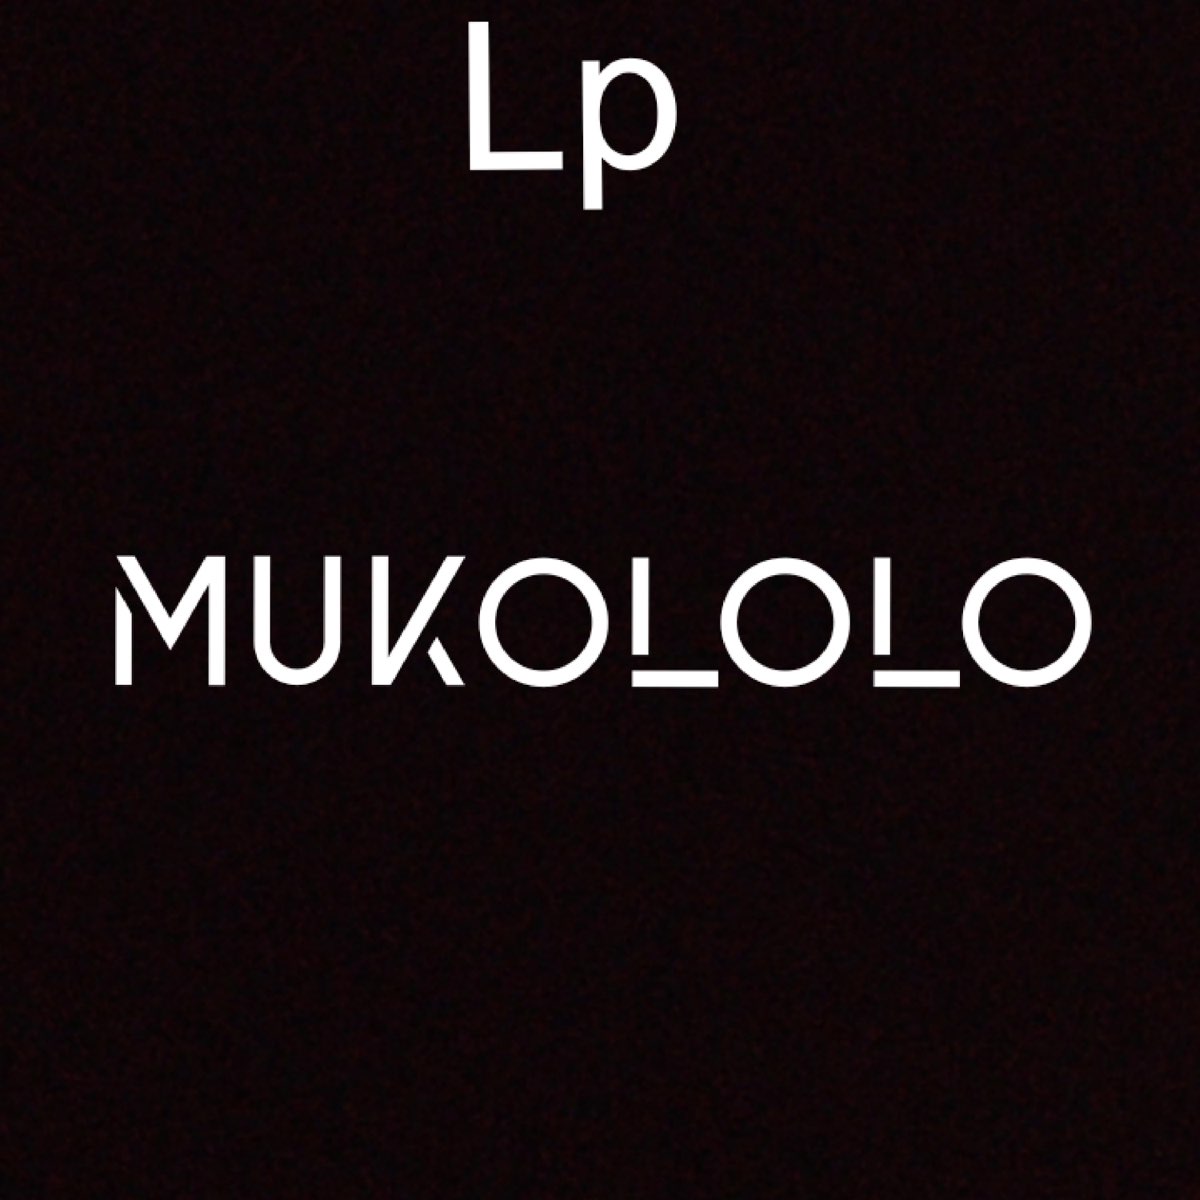 Mukololo - Single - Album by Lp MiDALO - Apple Music